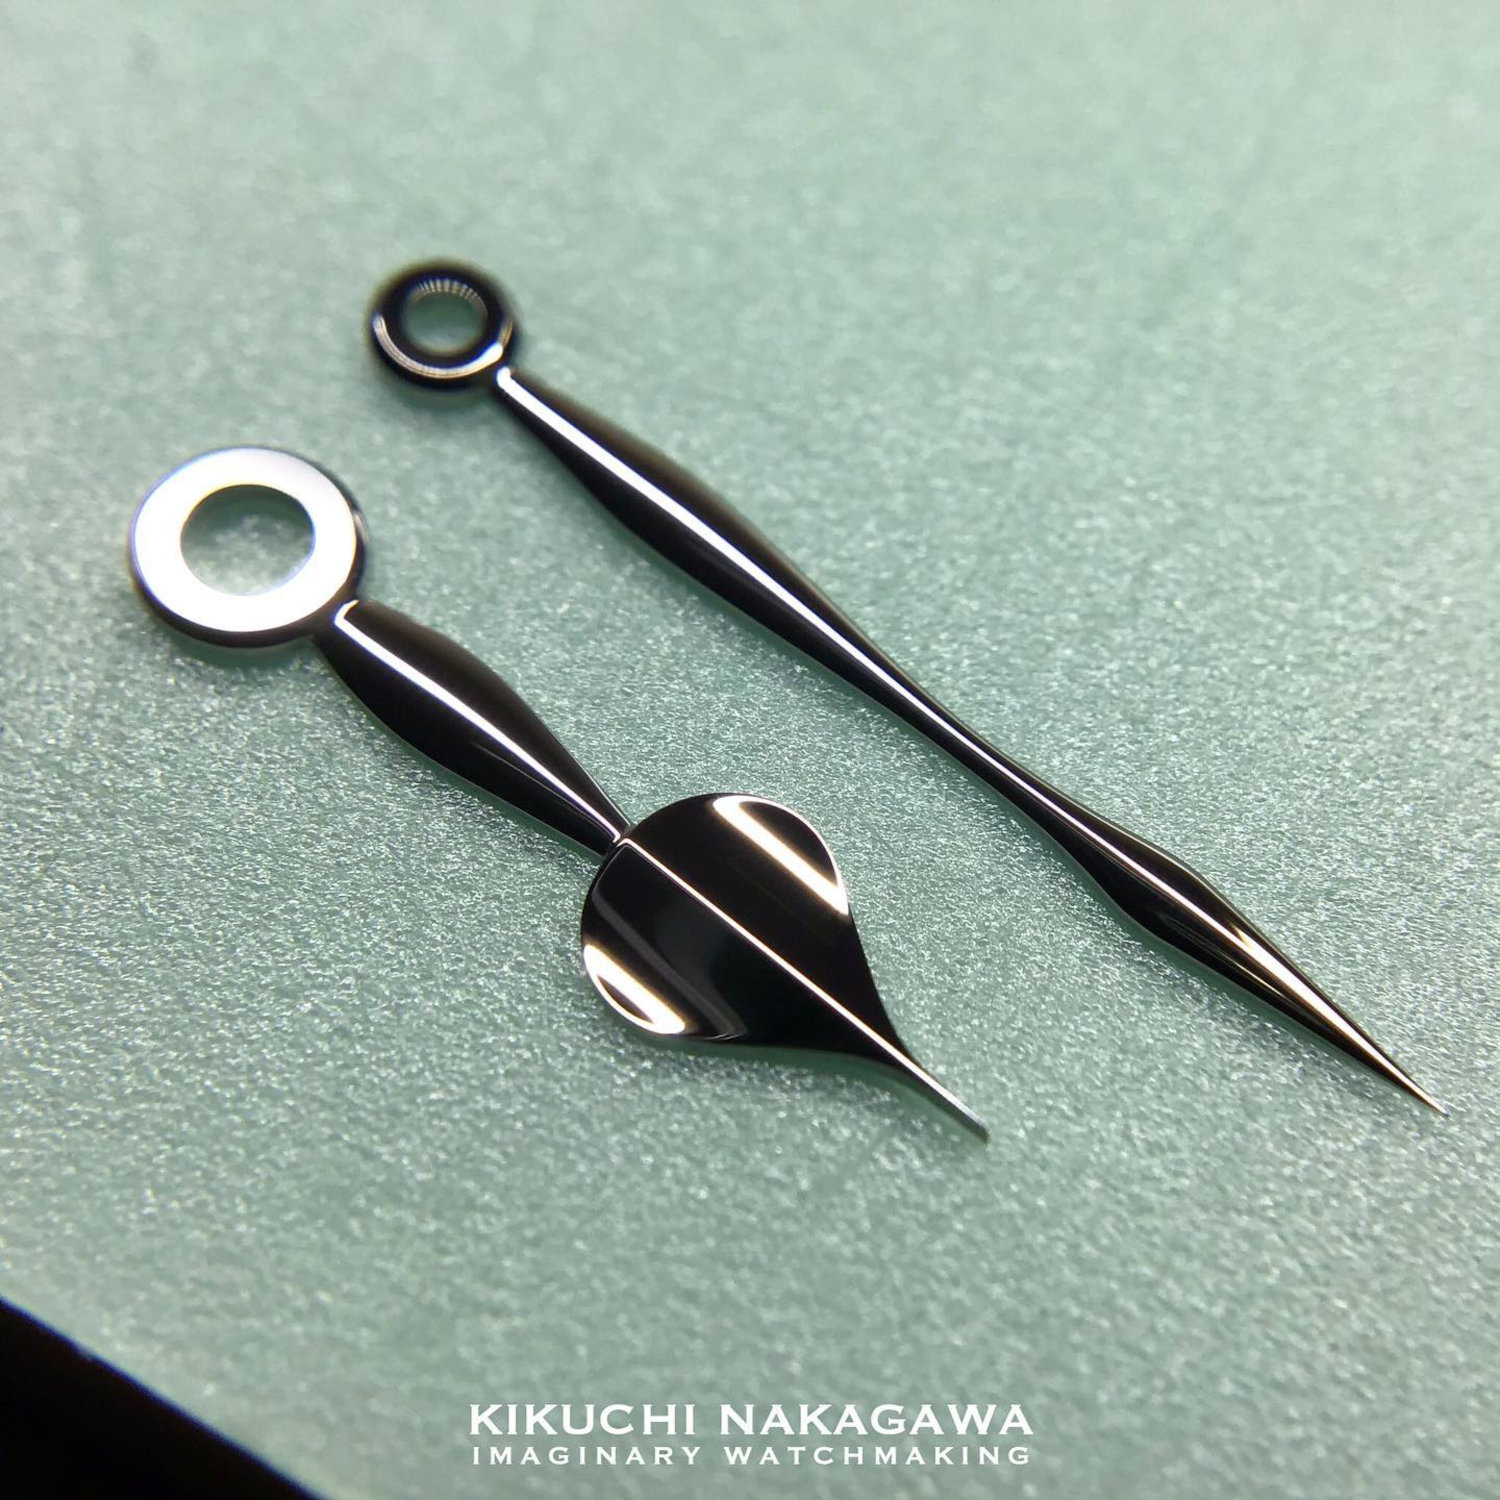 Kikuchi Nakagawa Craftsmanship 1